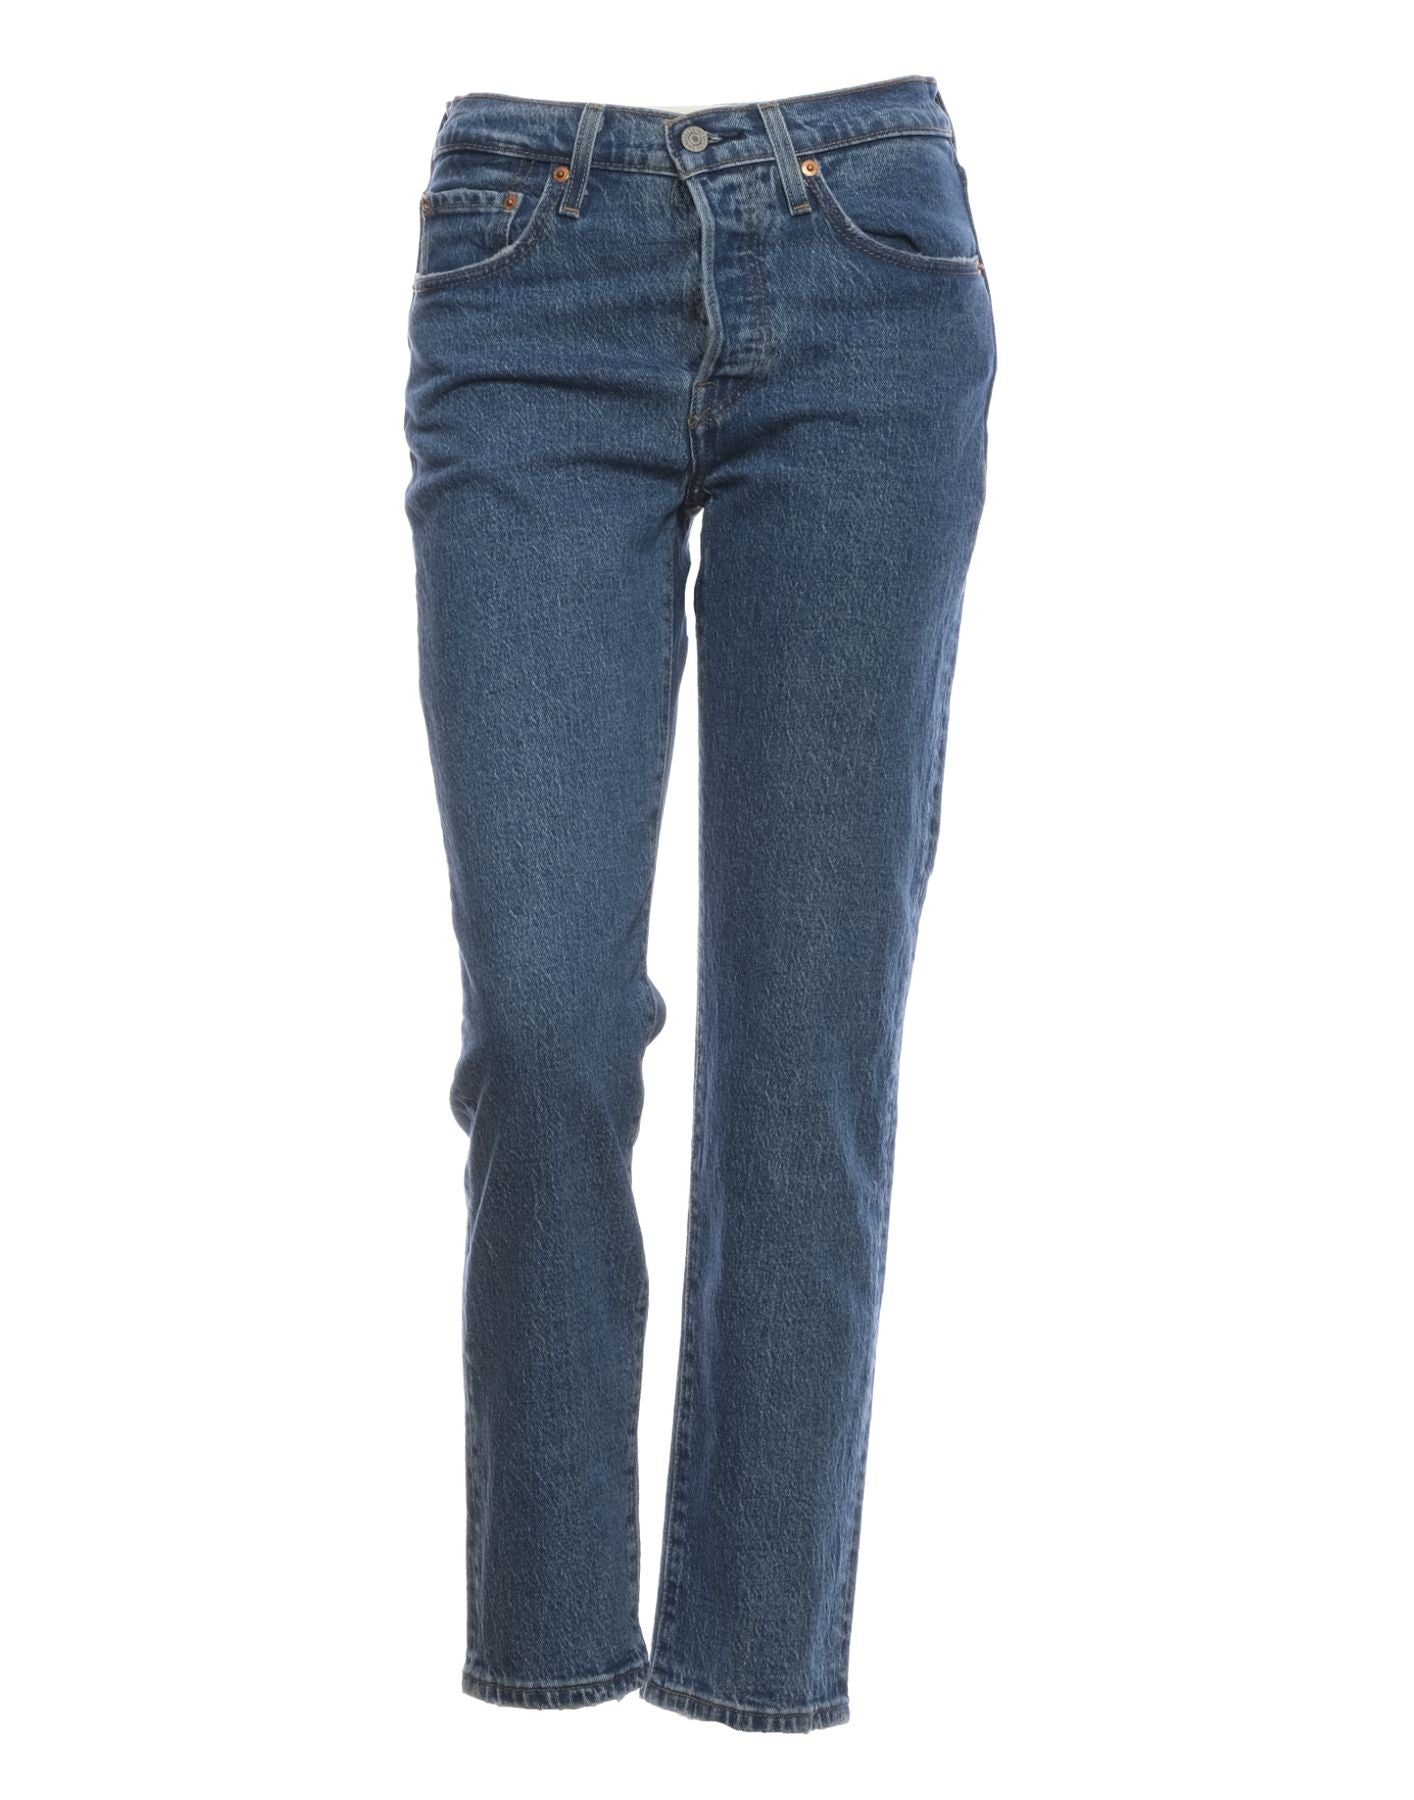 Jeans Woman 36200 0225 Jazz Pop Levi's